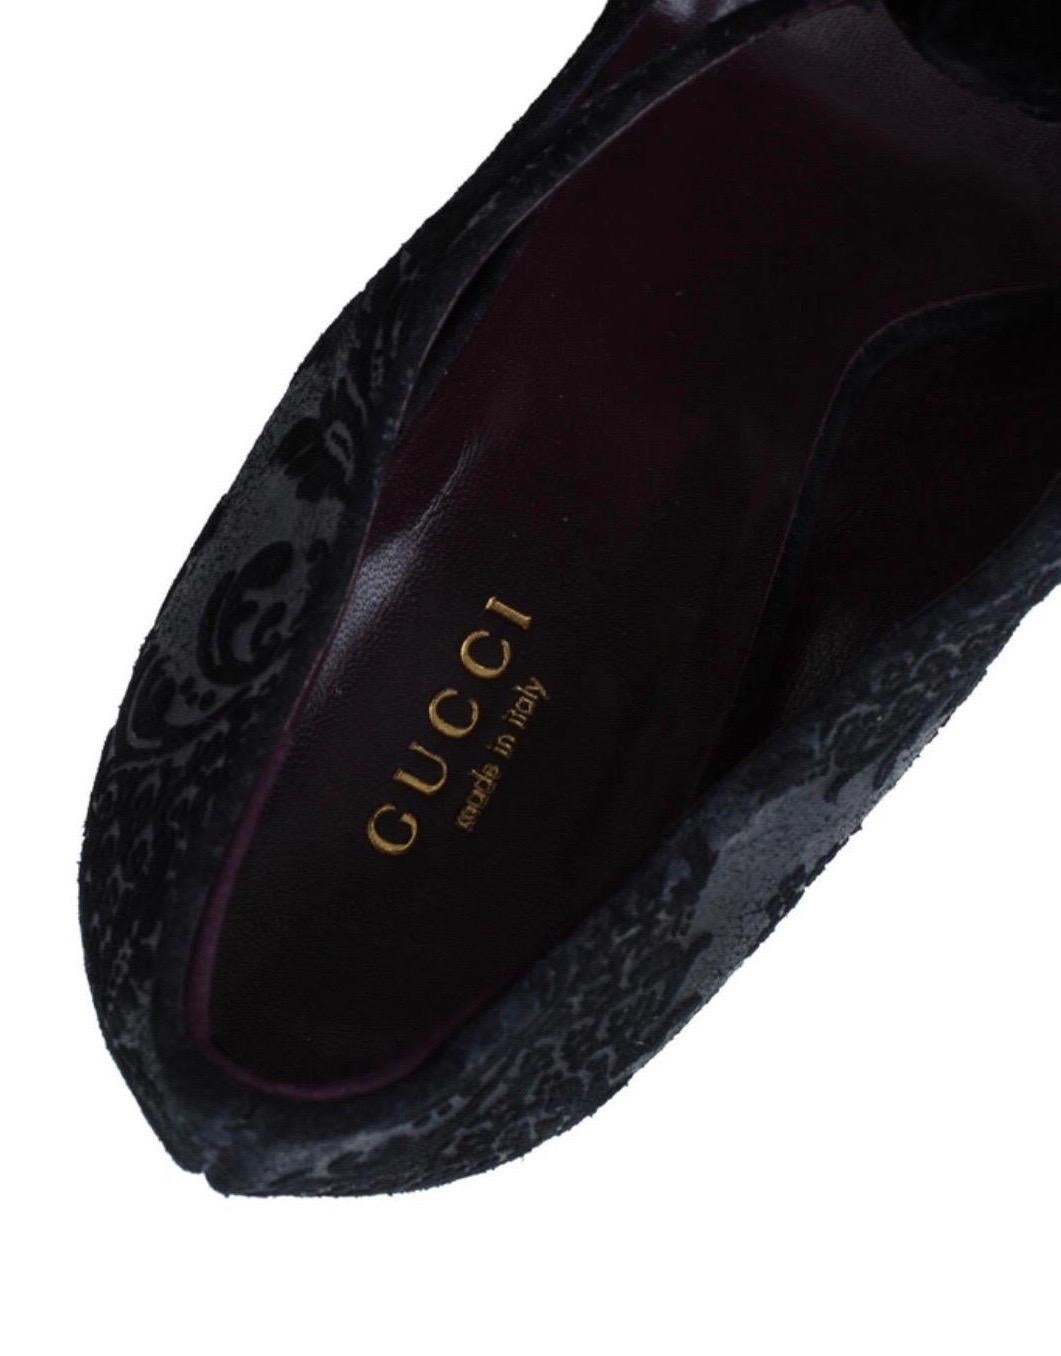 NEW Black Gucci Suede Brocade Pineapple High Heel Sandals Pumps Velvet Bowtie 38 For Sale 4